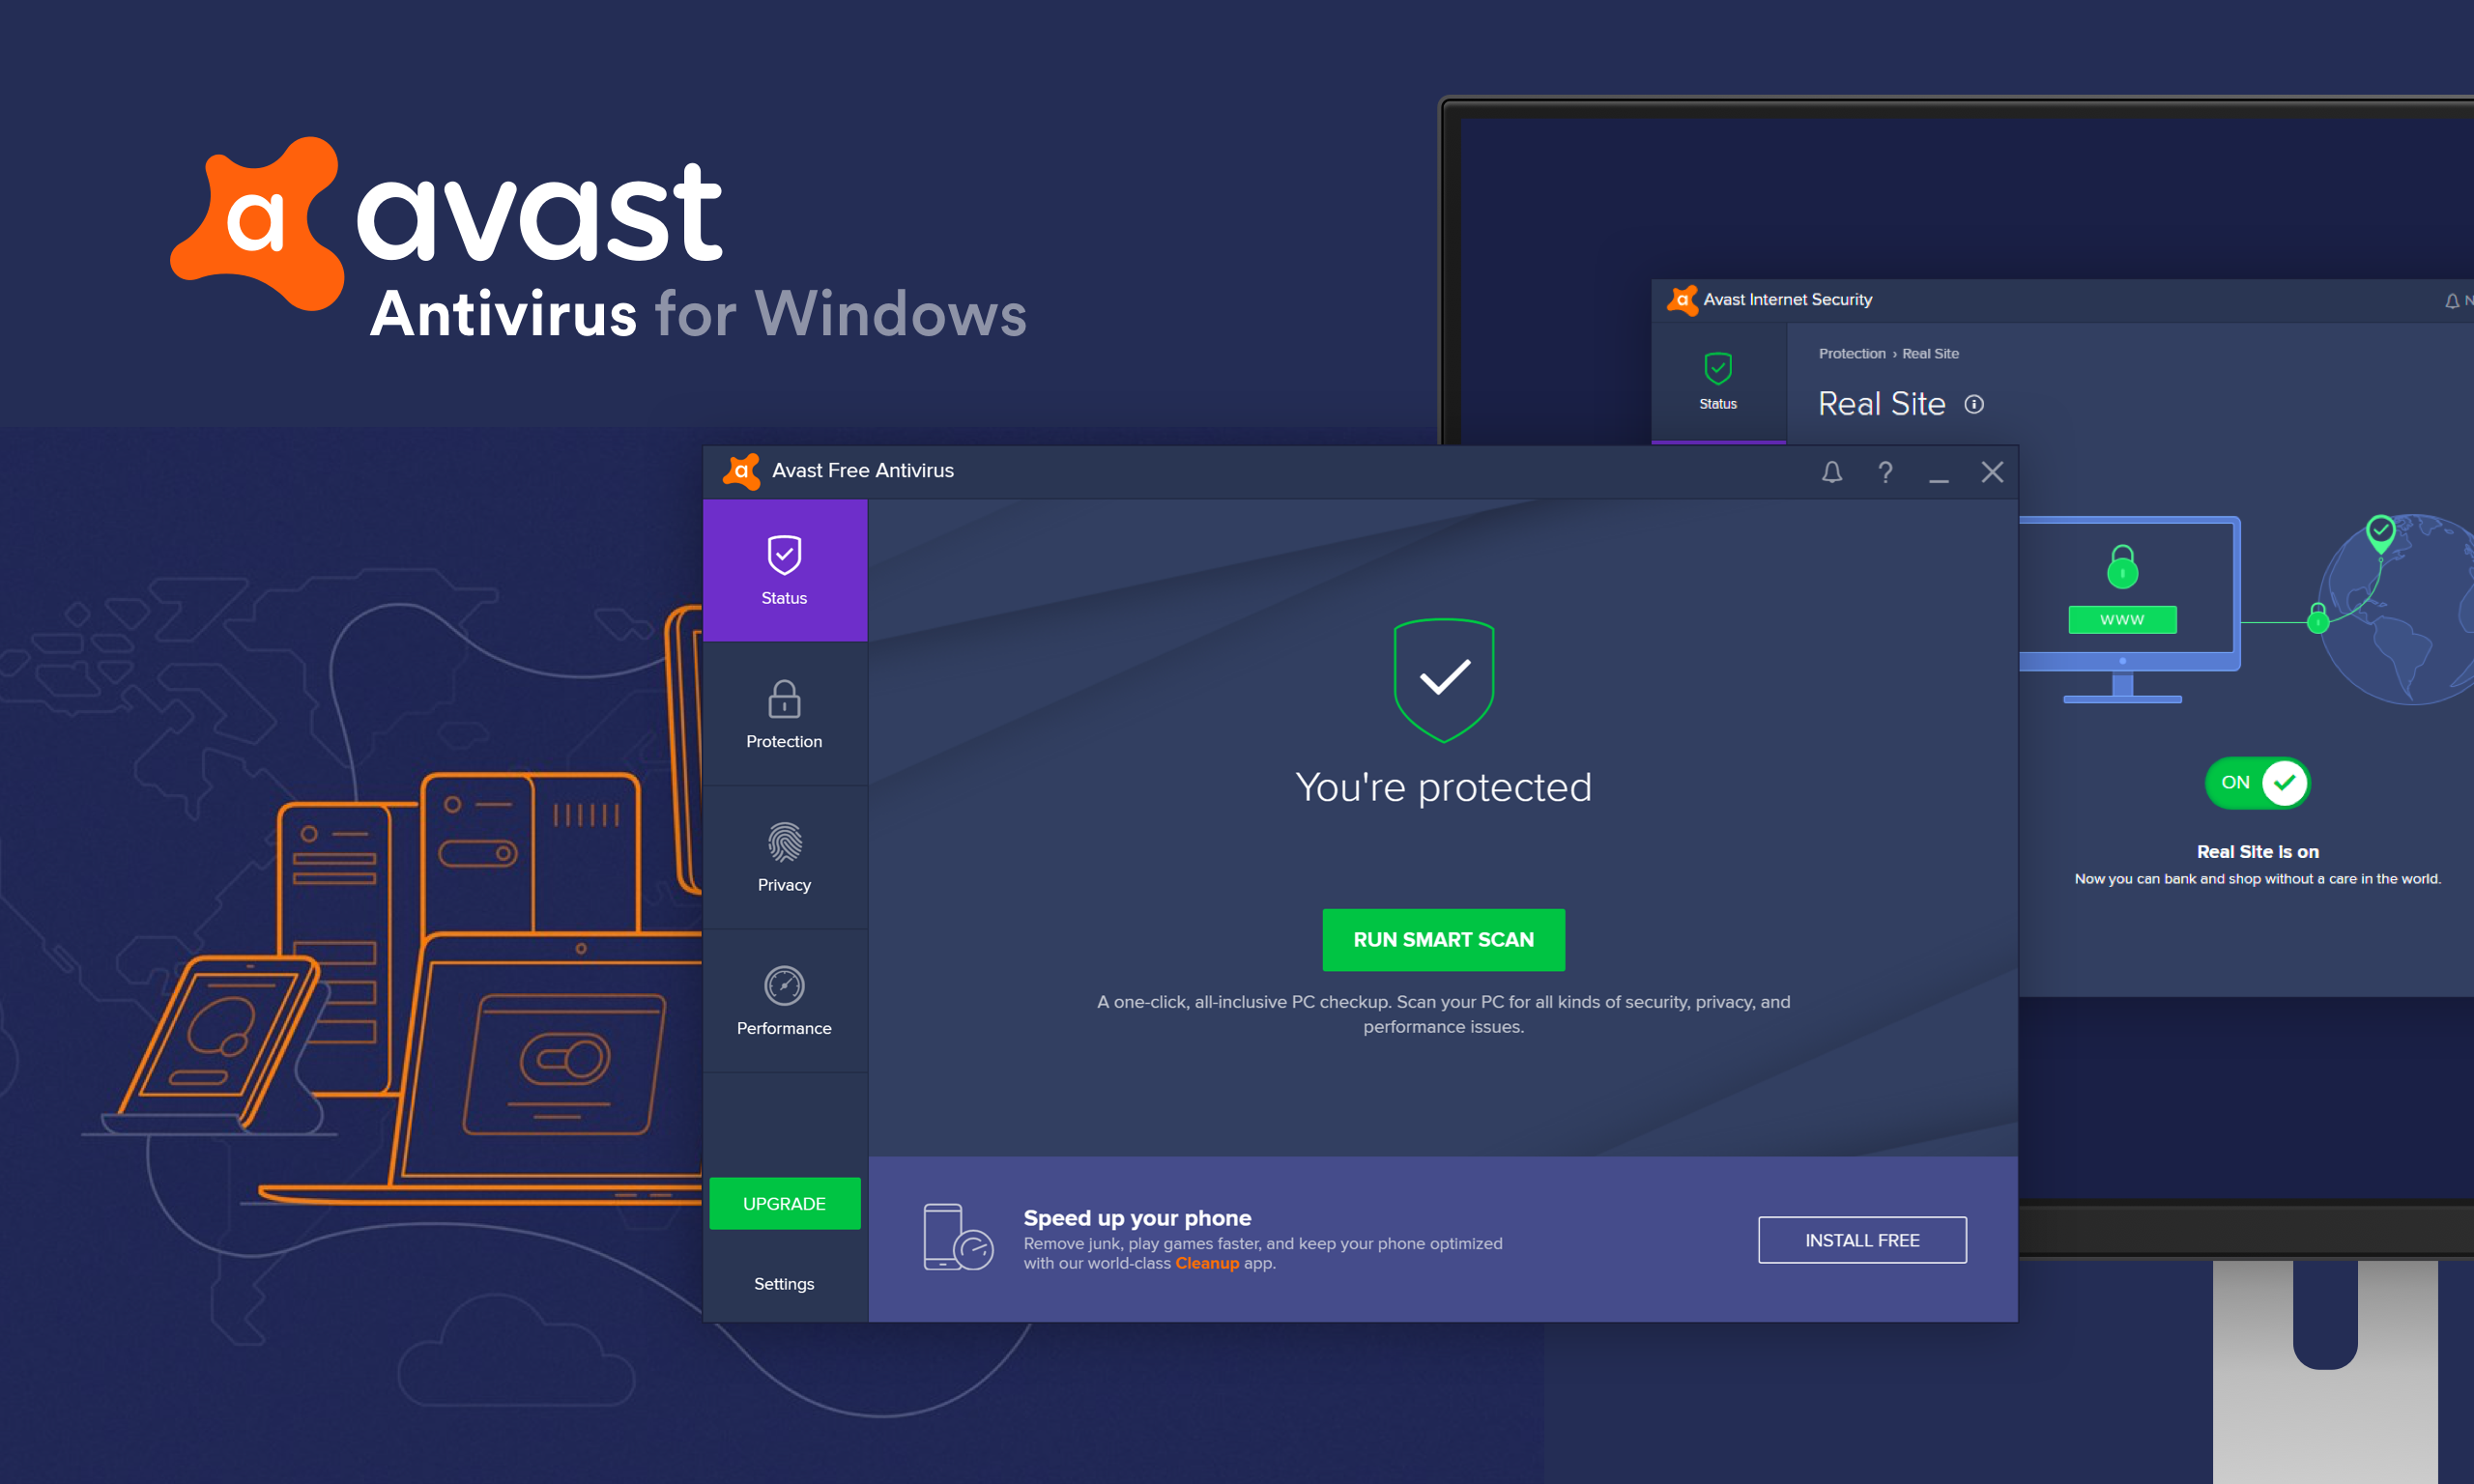 free download of avast antivirus for windows 8.1